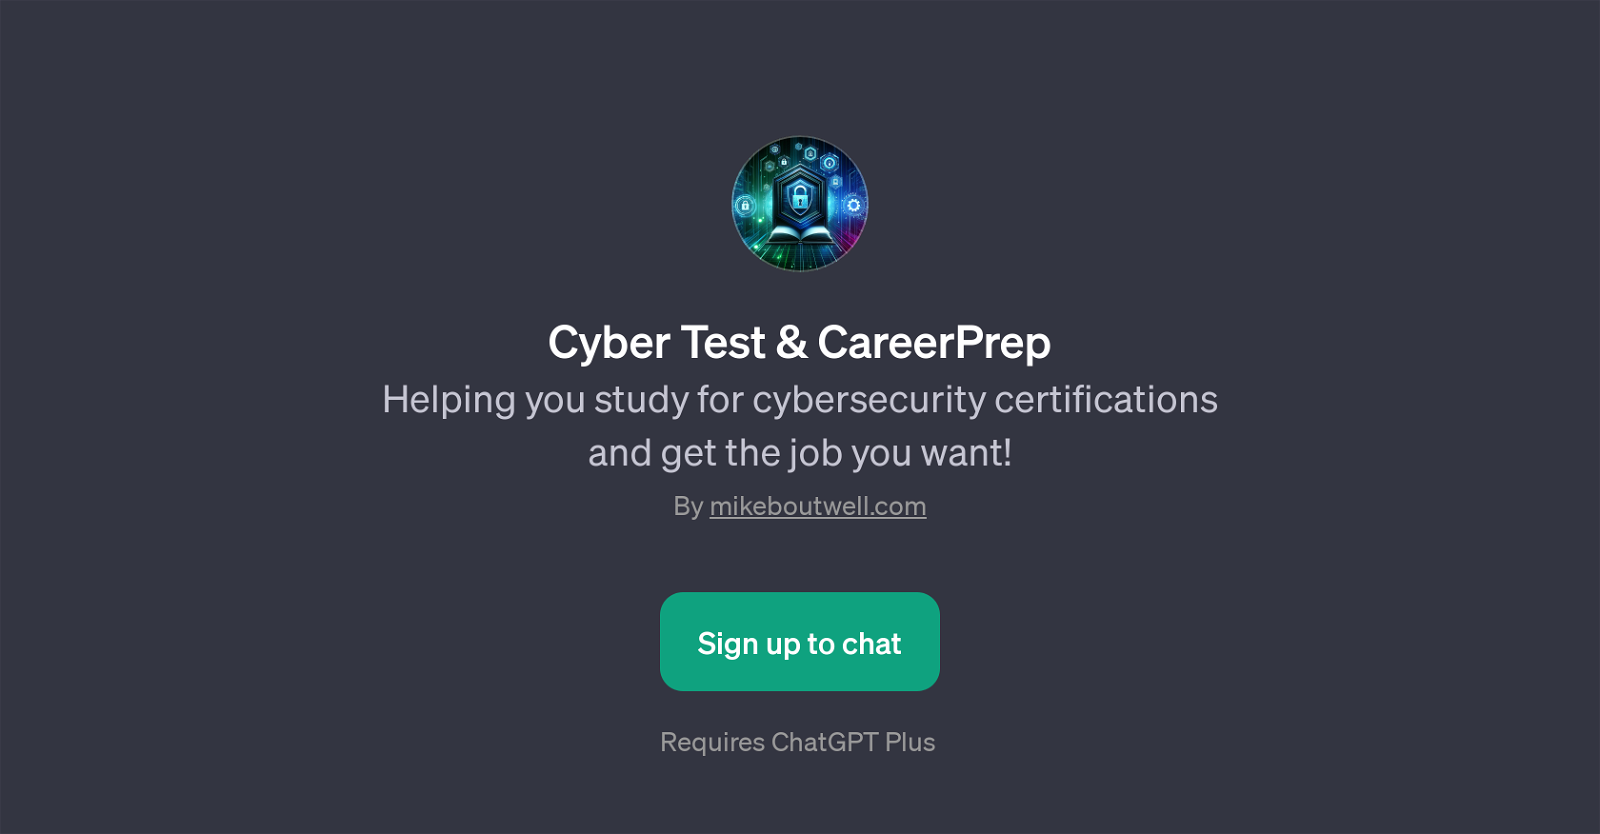 Cyber Test & CareerPrep website